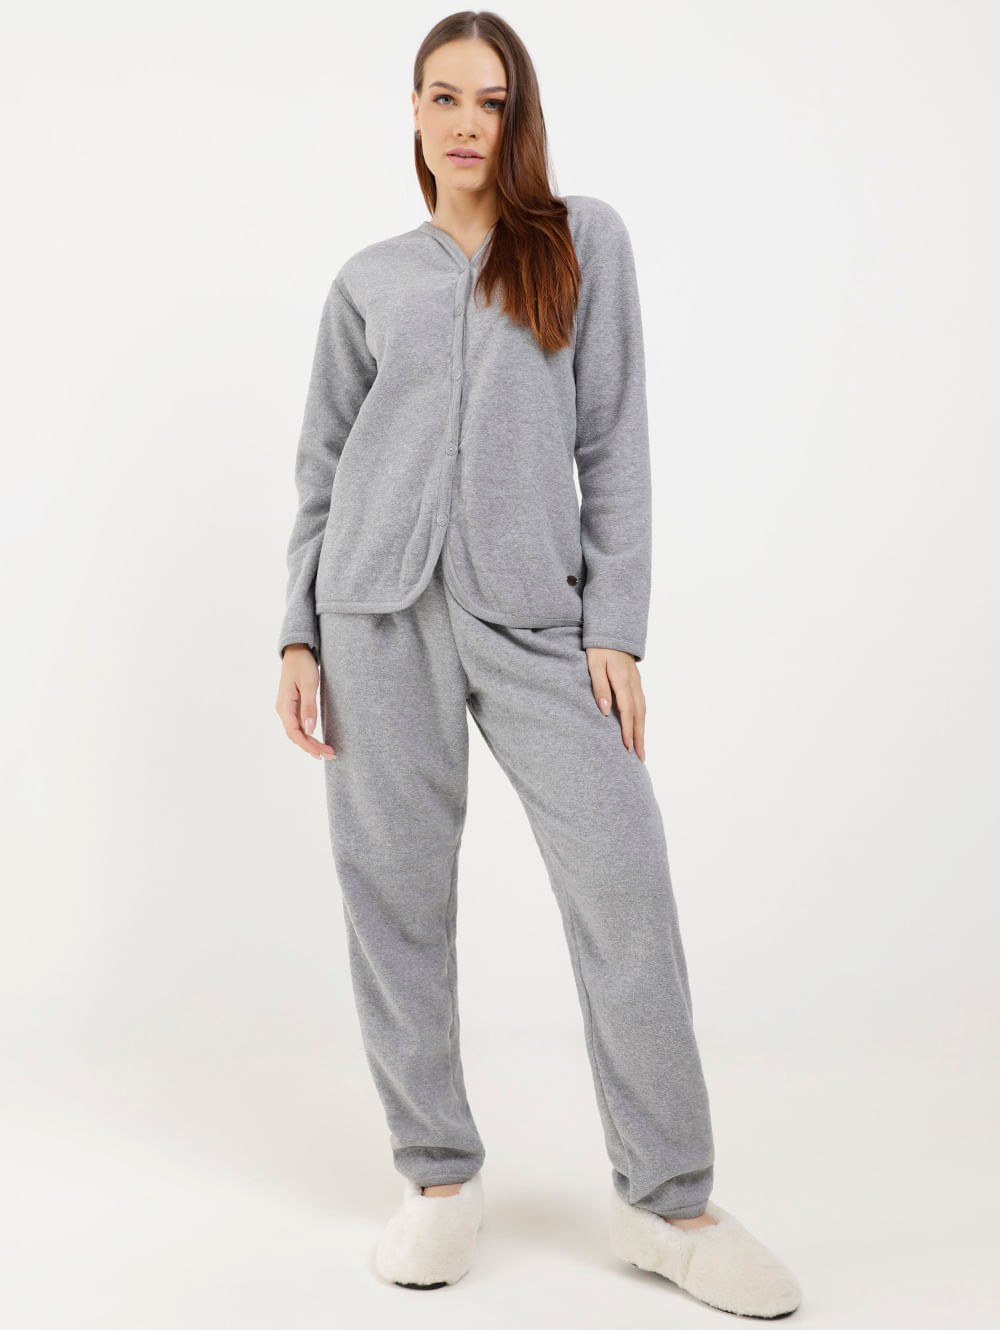 Comprar Pijama de Inverno Longo Plush Feminino Cinza